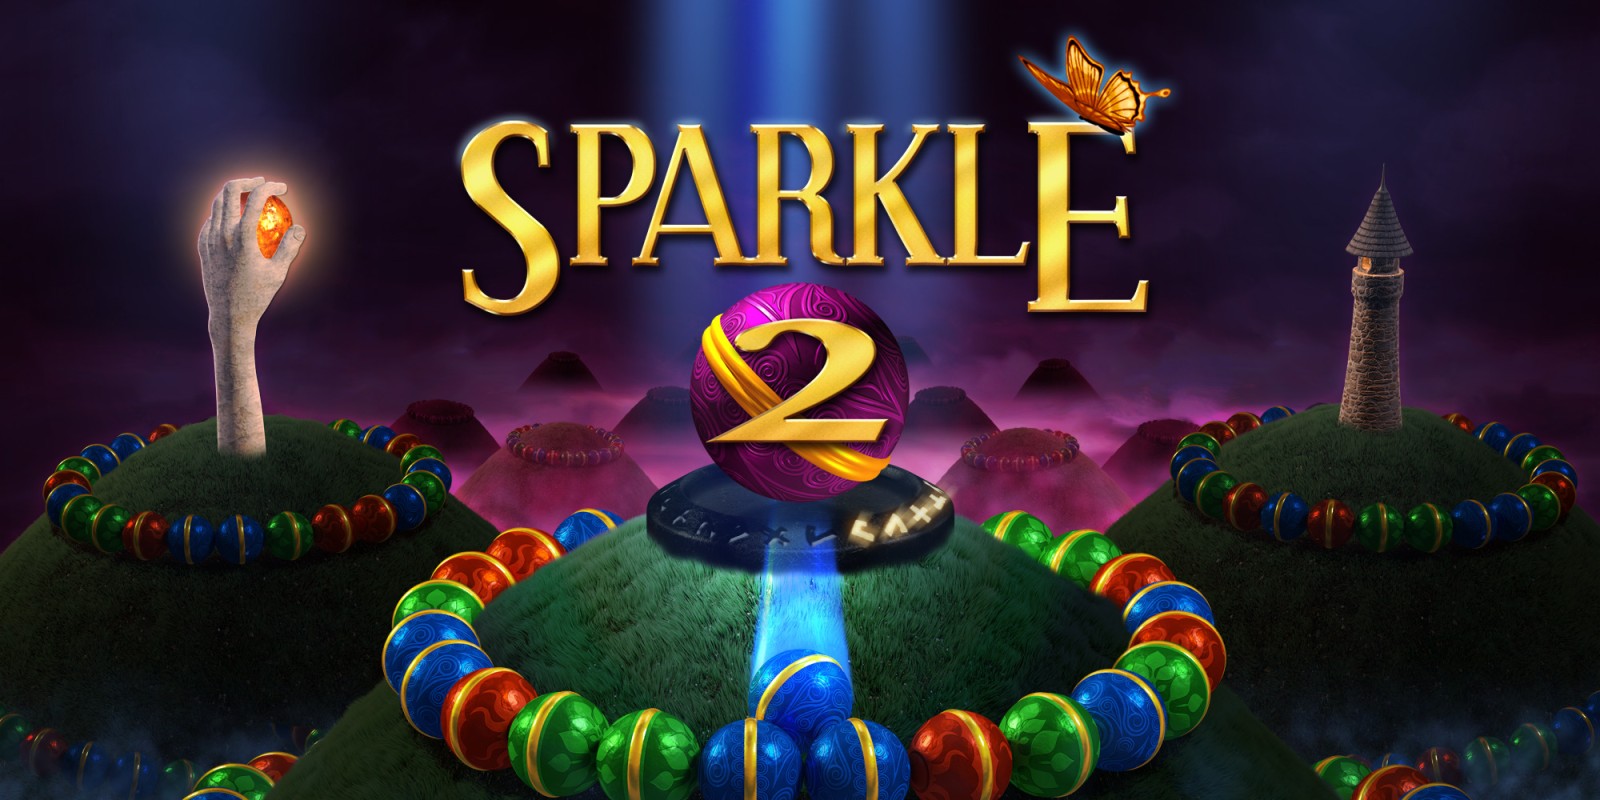 sparkle 2 free games